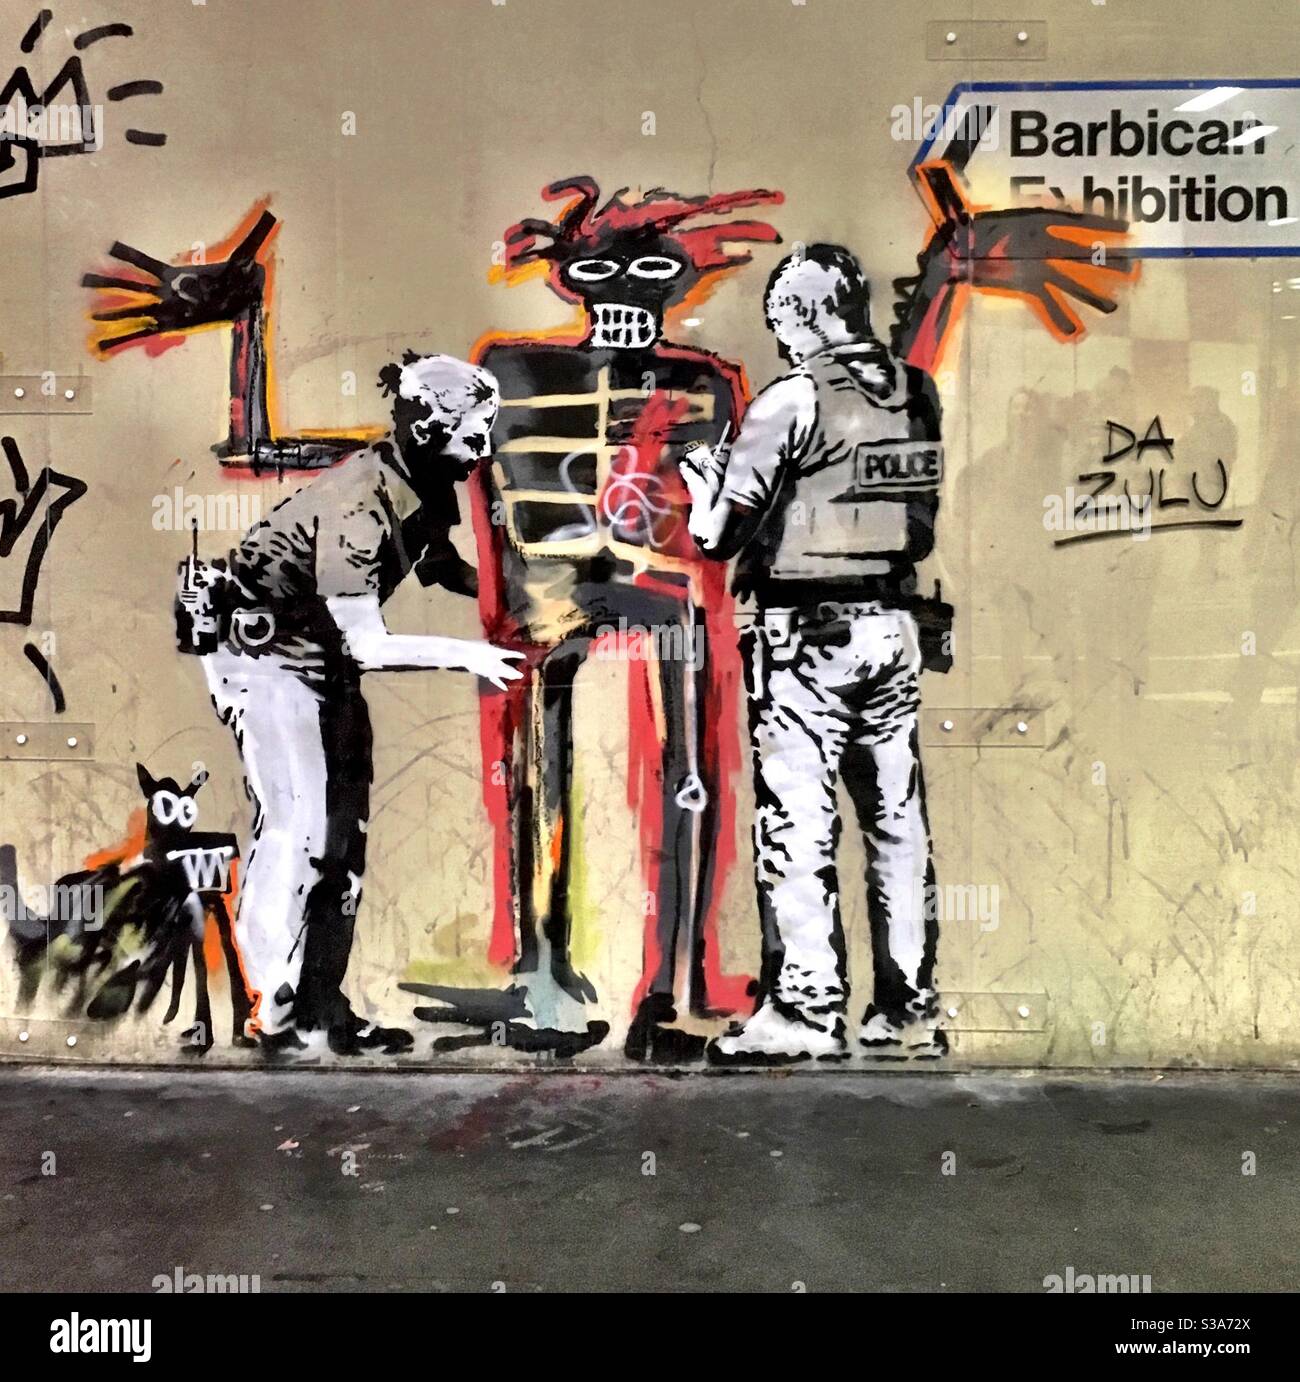 Banksy Street Art Graffiti On Artist Basquiat At Barbican In London Stock Photo Alamy